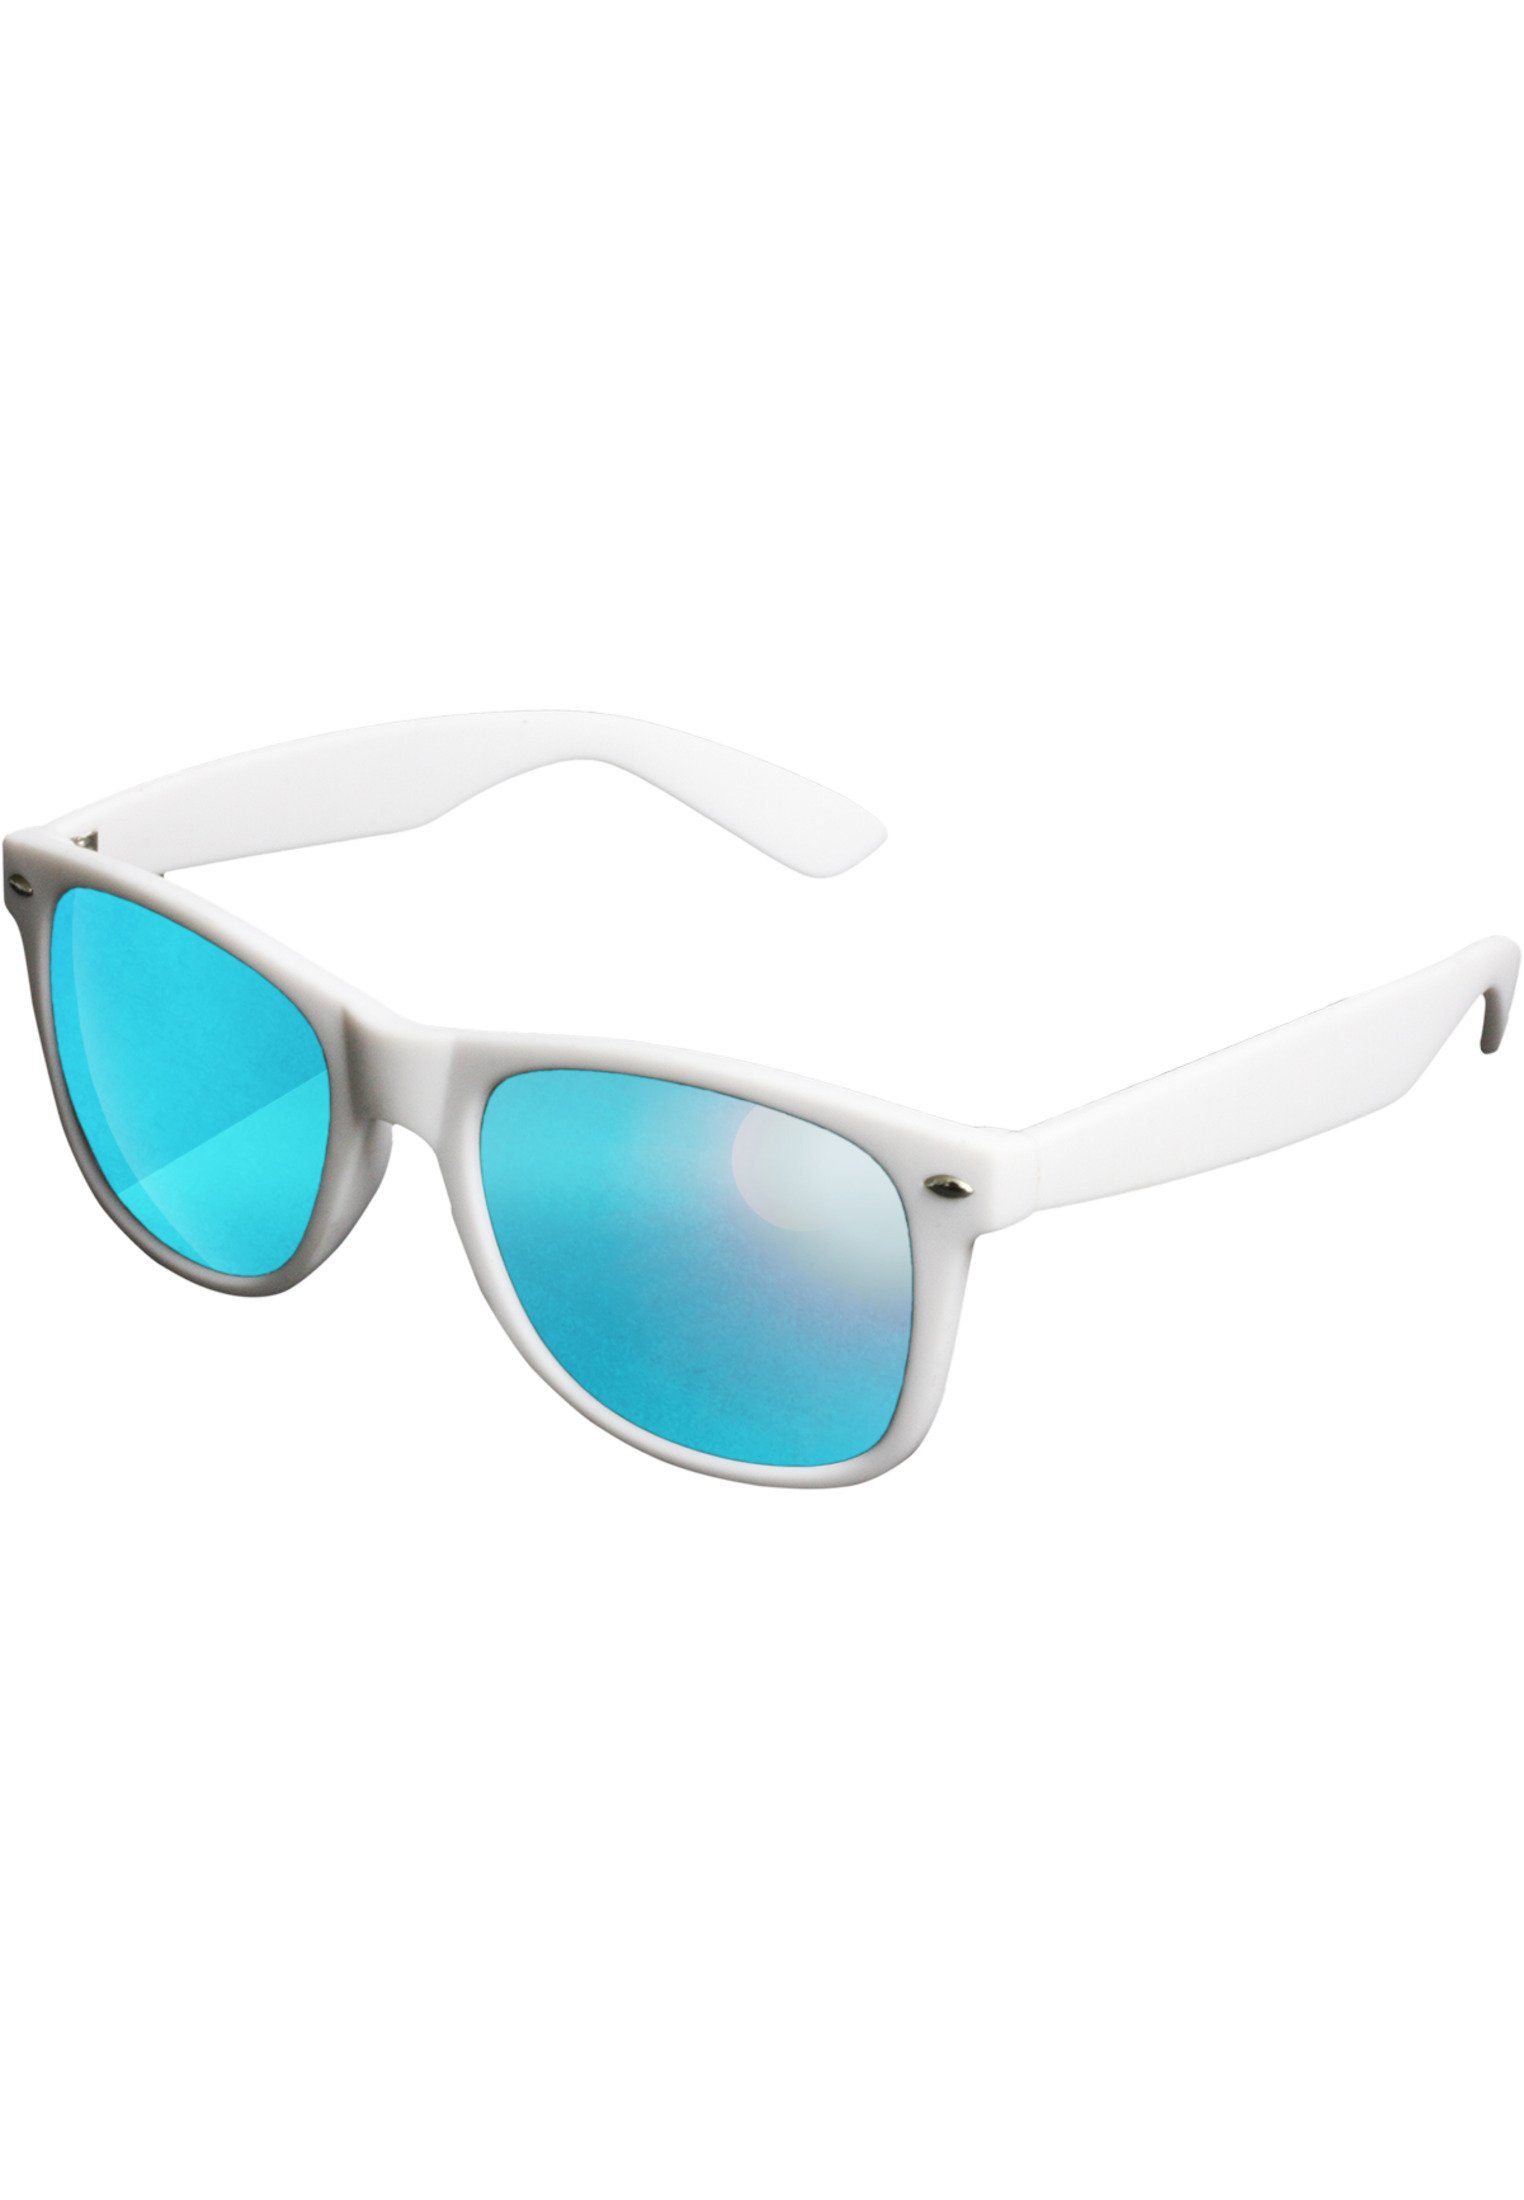 Accessoires Sunglasses Likoma Mirror MSTRDS wht/blu Sonnenbrille